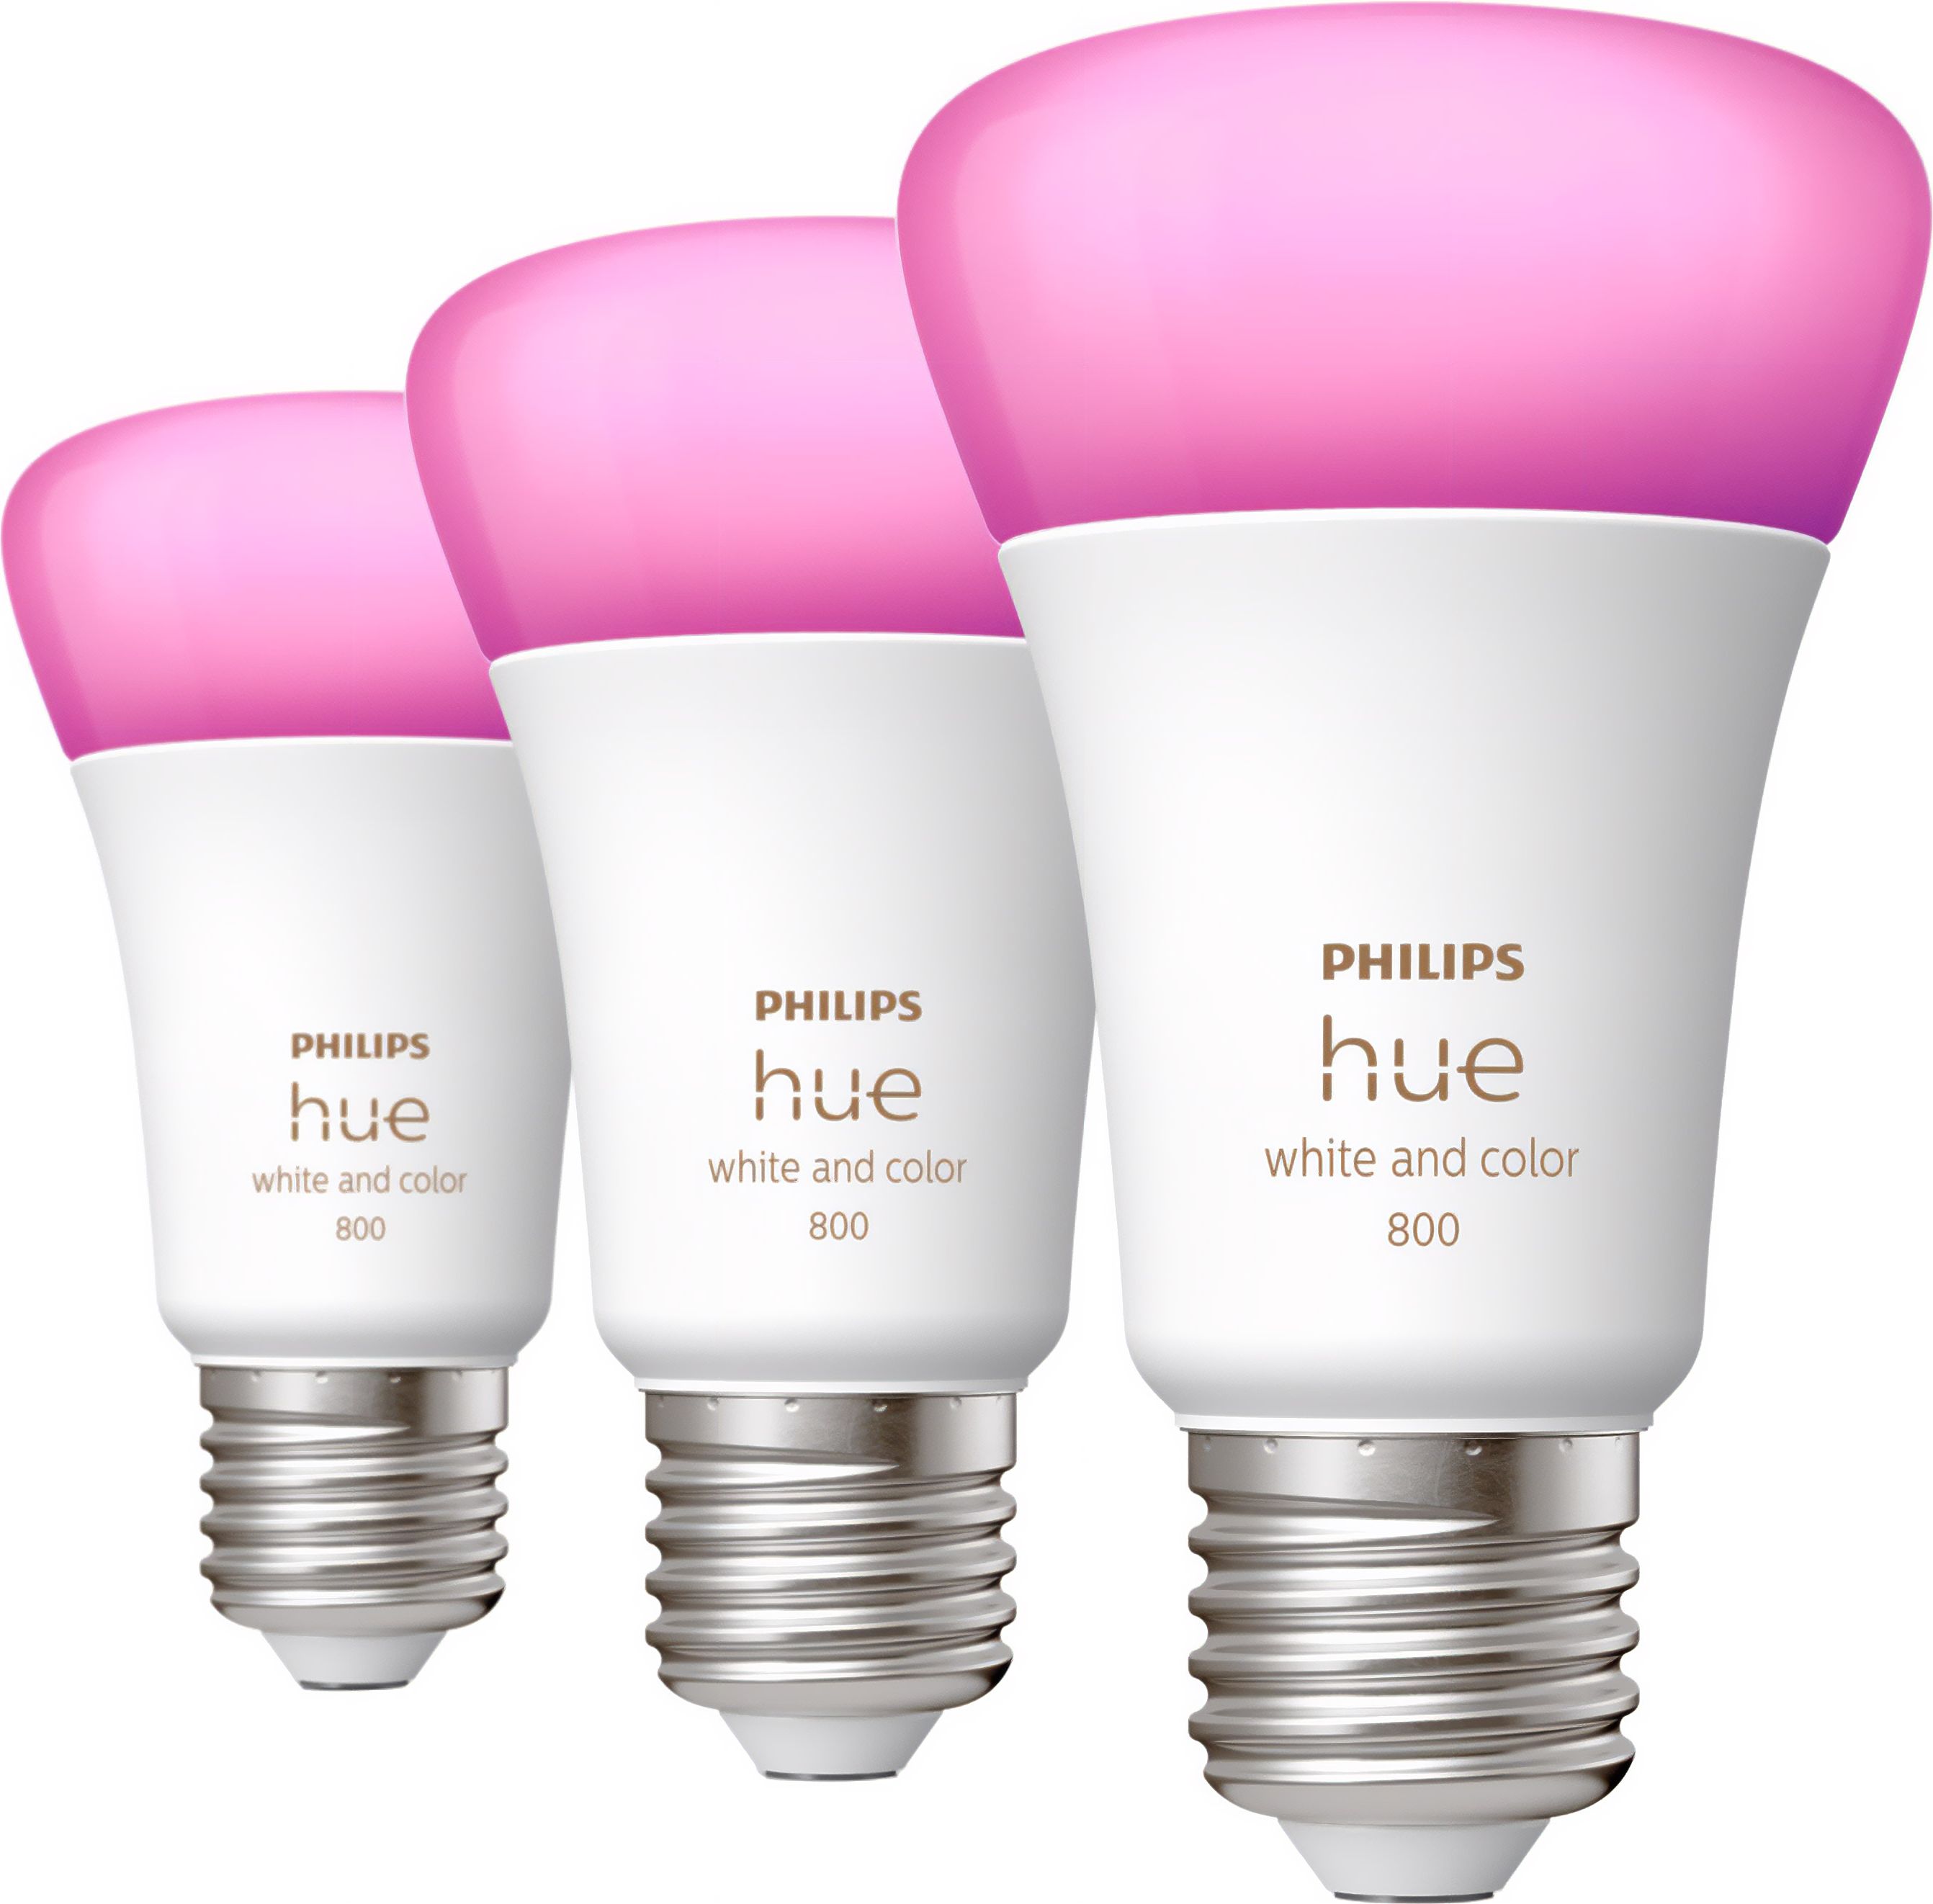 Philips Hue White and Colour Ambiance E27 Smart Bulb - 3 Pack - White, White